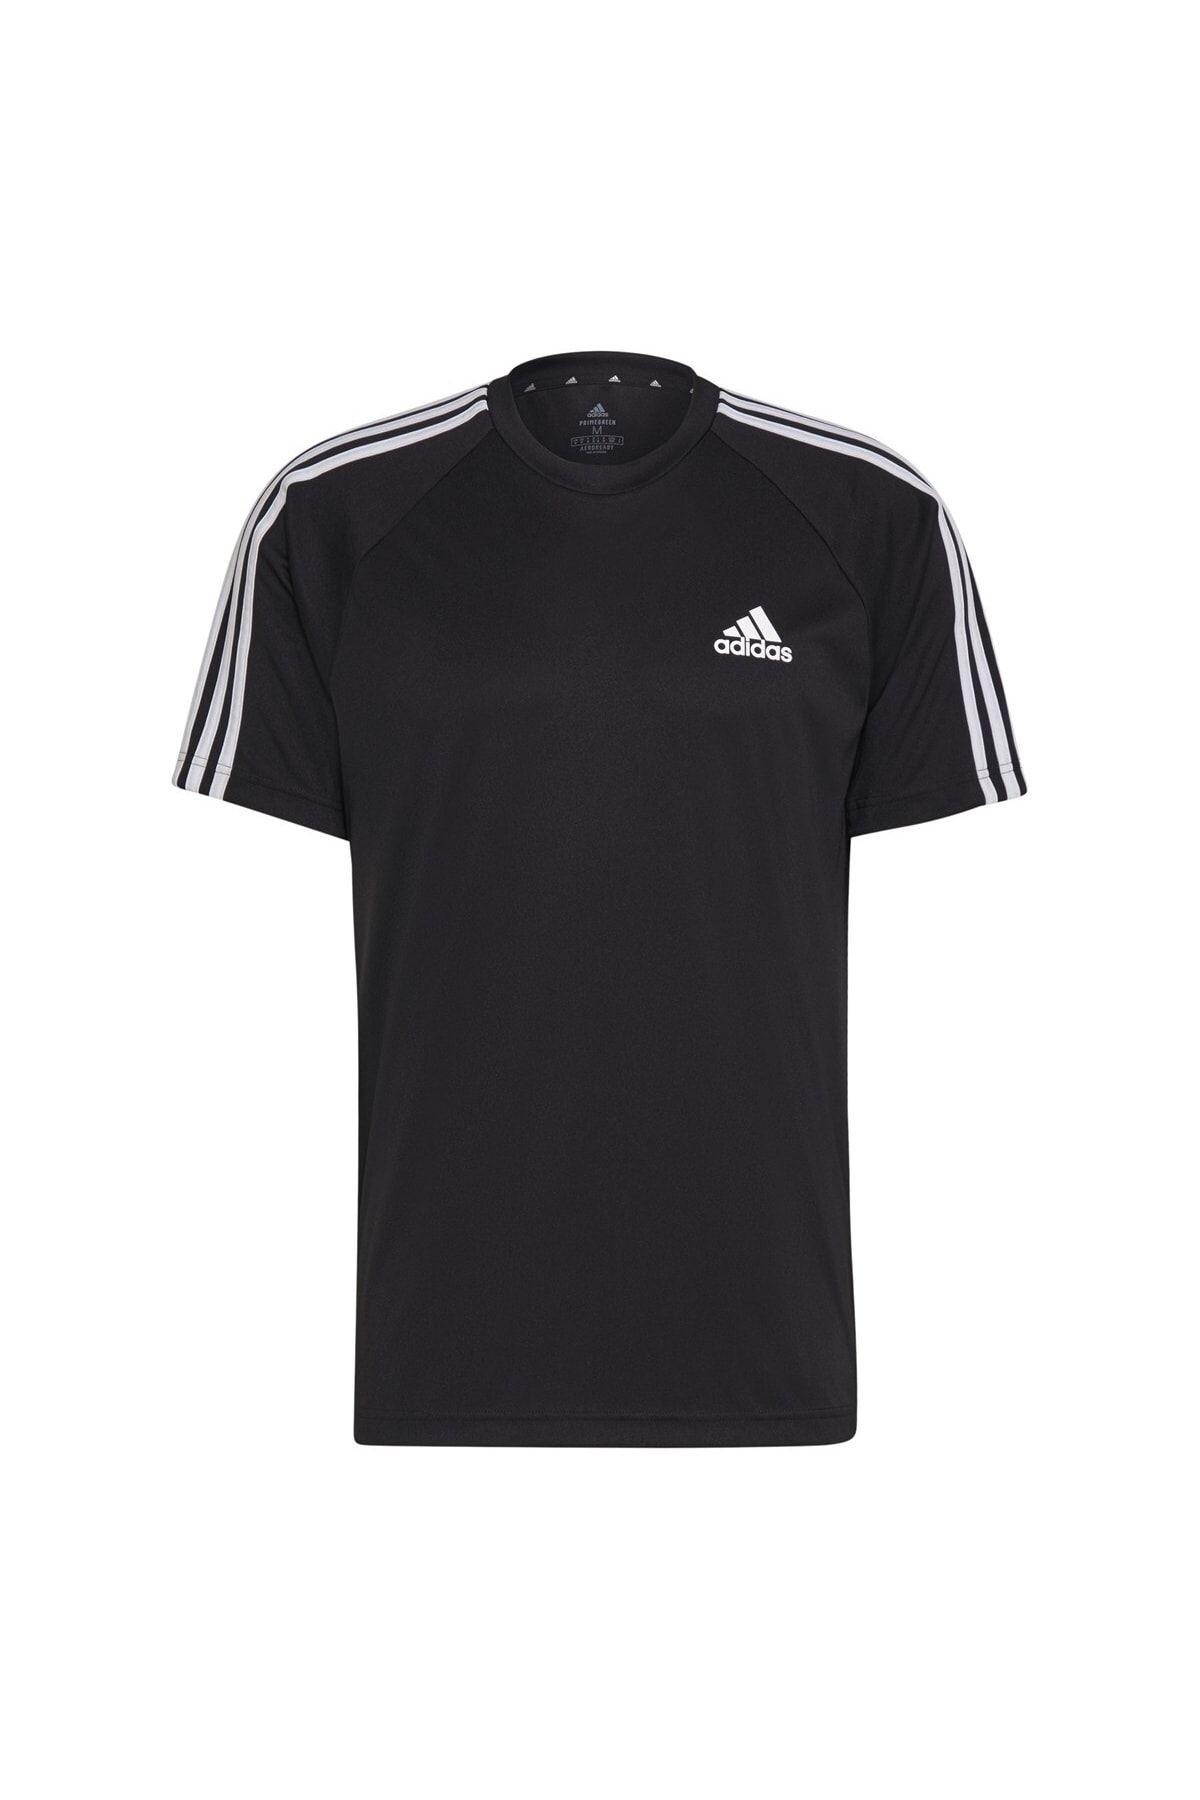 adidas Sports T-Shirt - Trendyol - Black